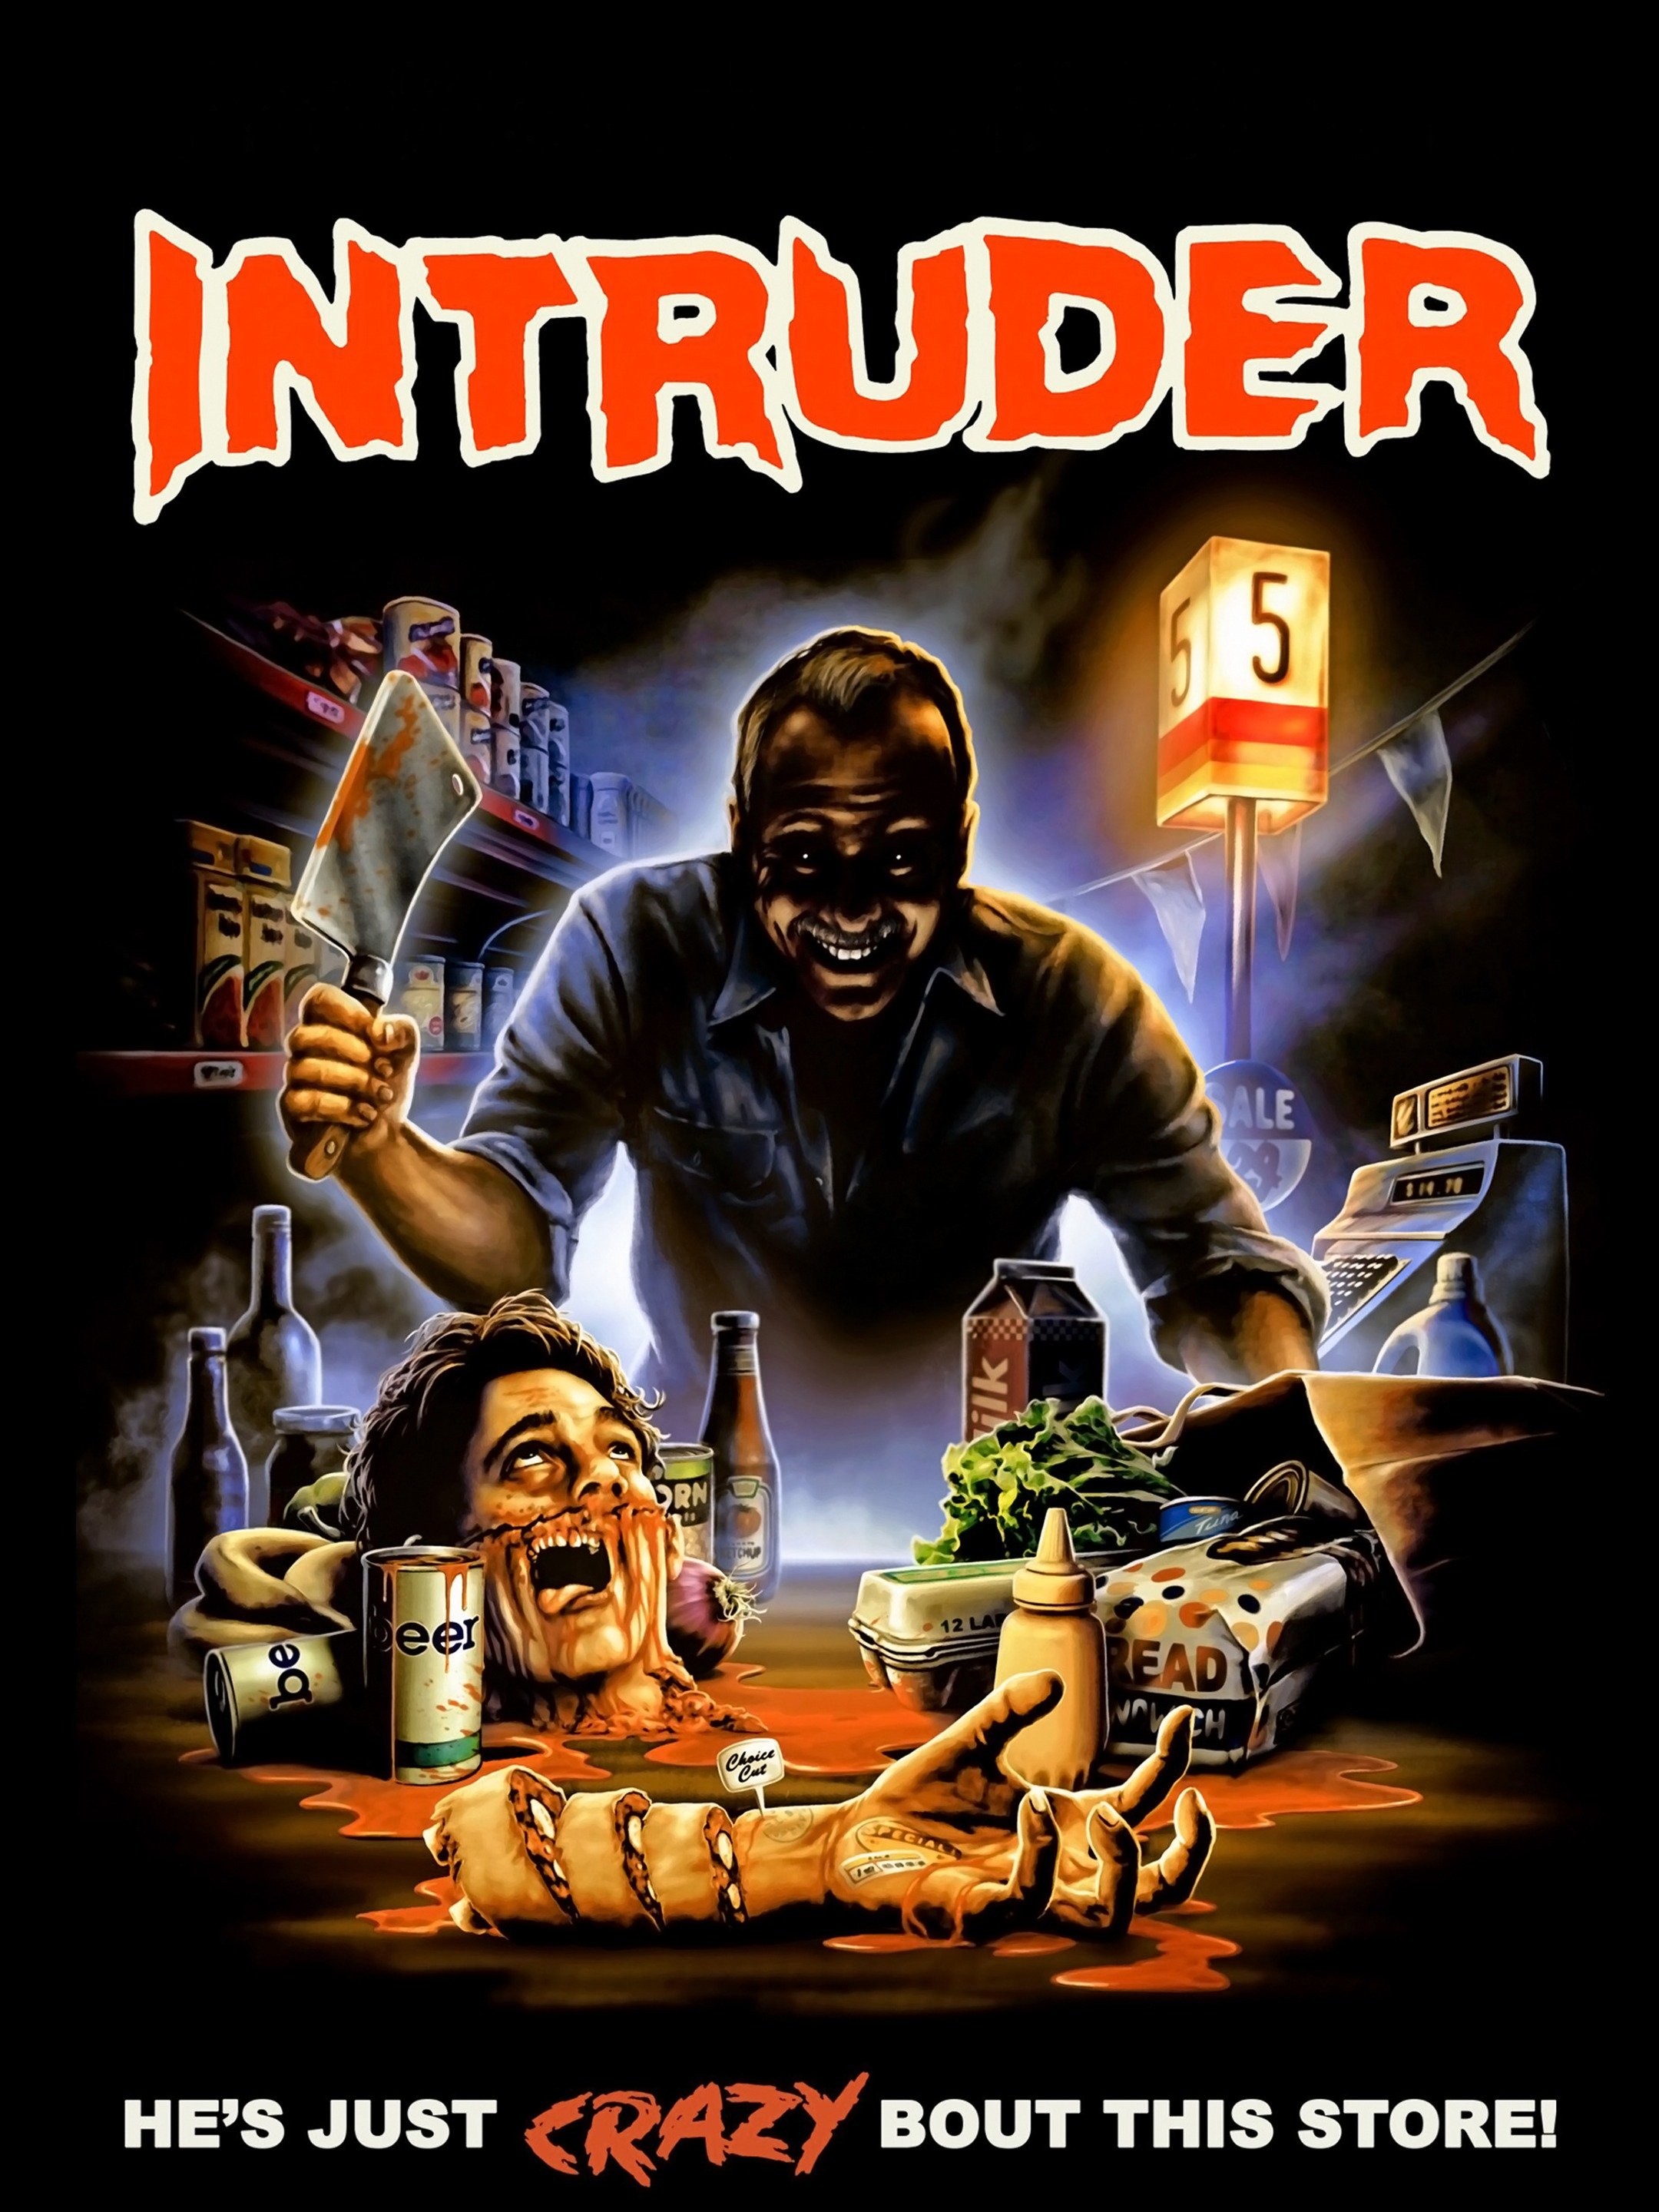 Intruders (2017) movie poster